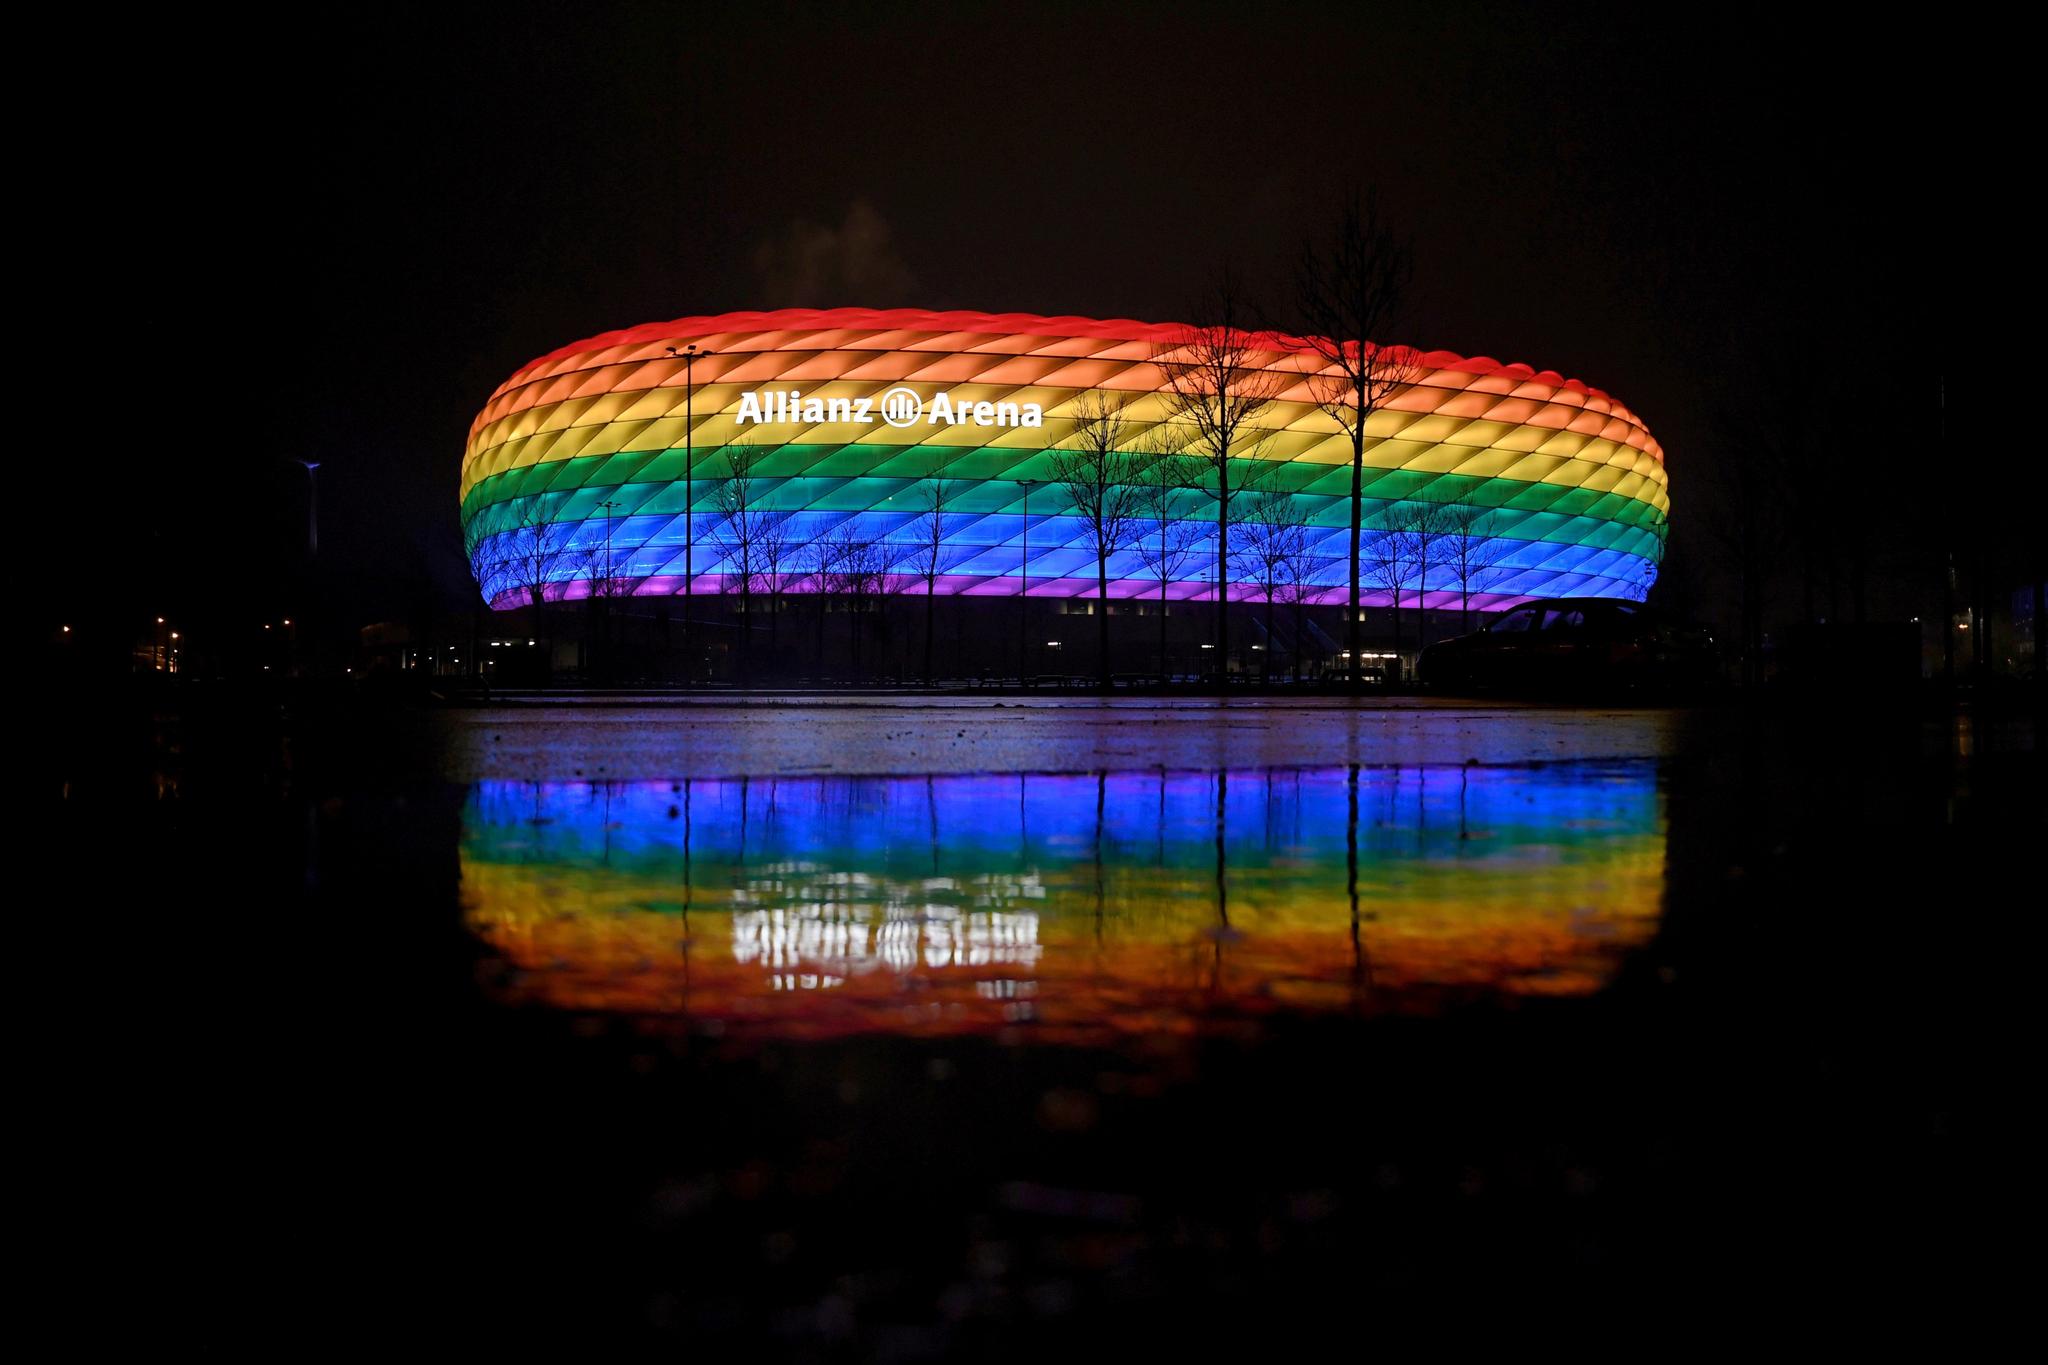 VILLE LYSE SLIK: Tyskland ville at Allianz Arena skulle se slik ut da de tok imot Ungarn til EM-kamp onsdag. 